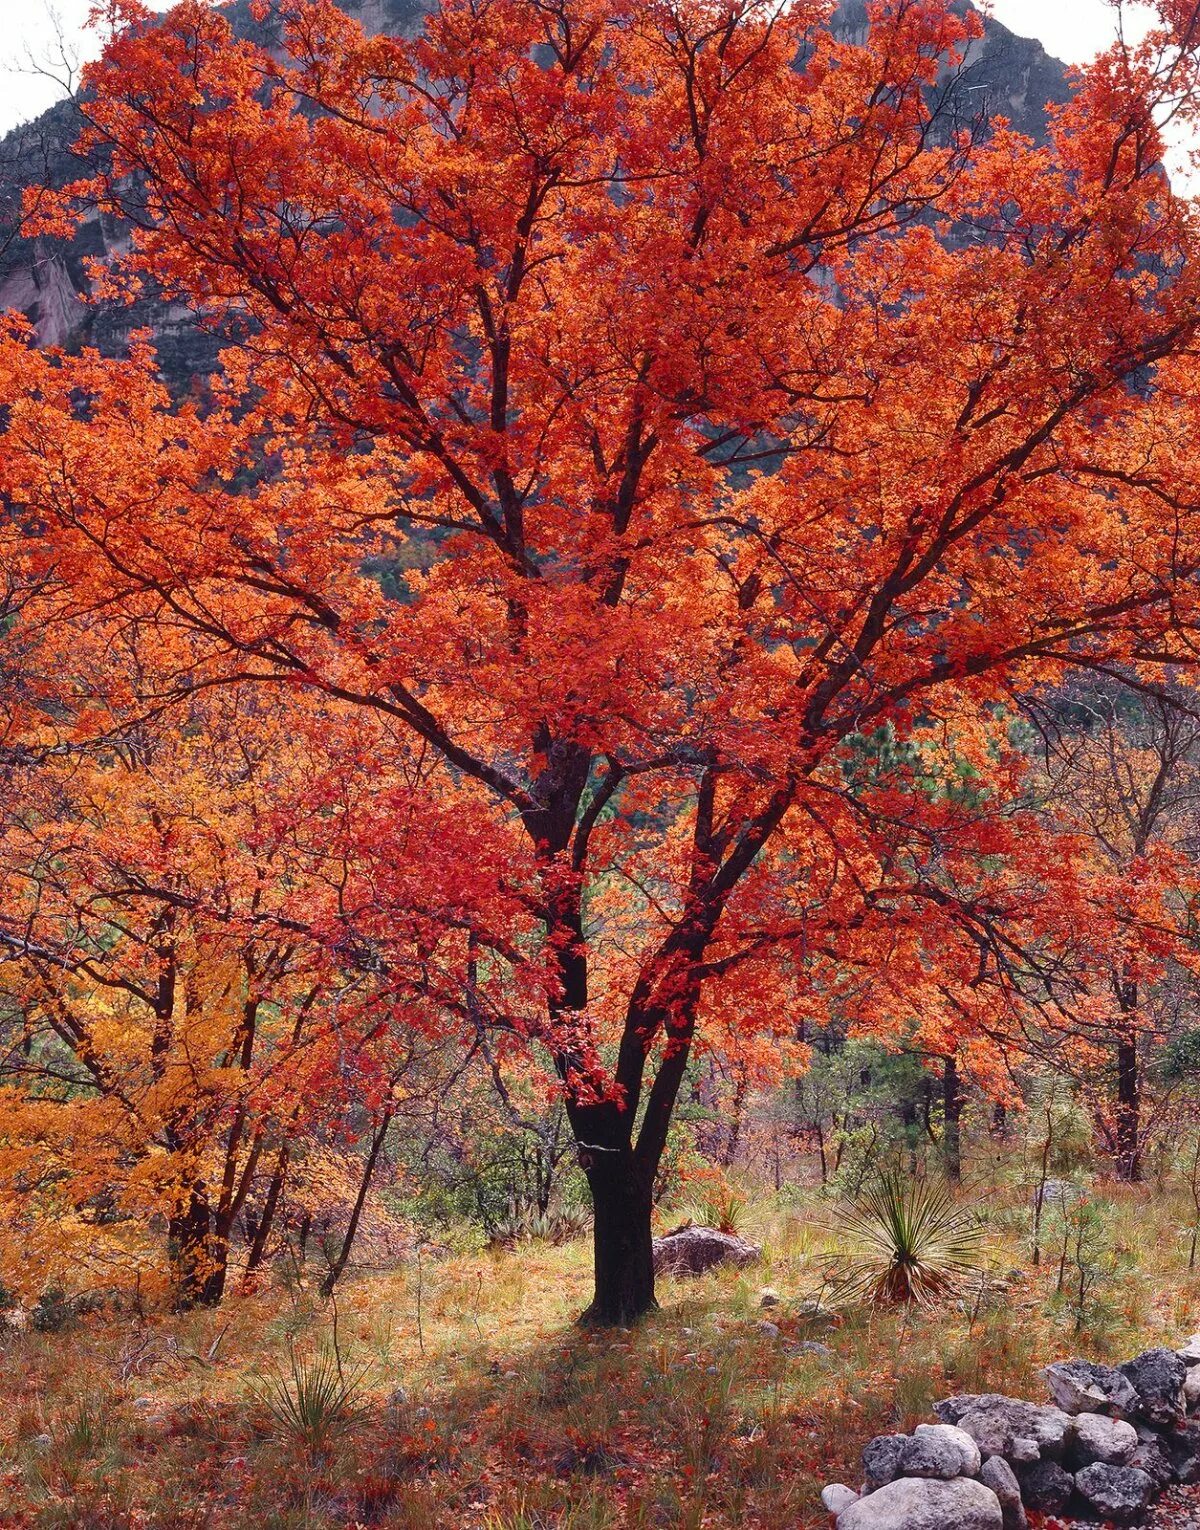 Осеннее дерево. Осина осенью. Осина дерево осенью. Осинка осенью. Осинка листья осенью